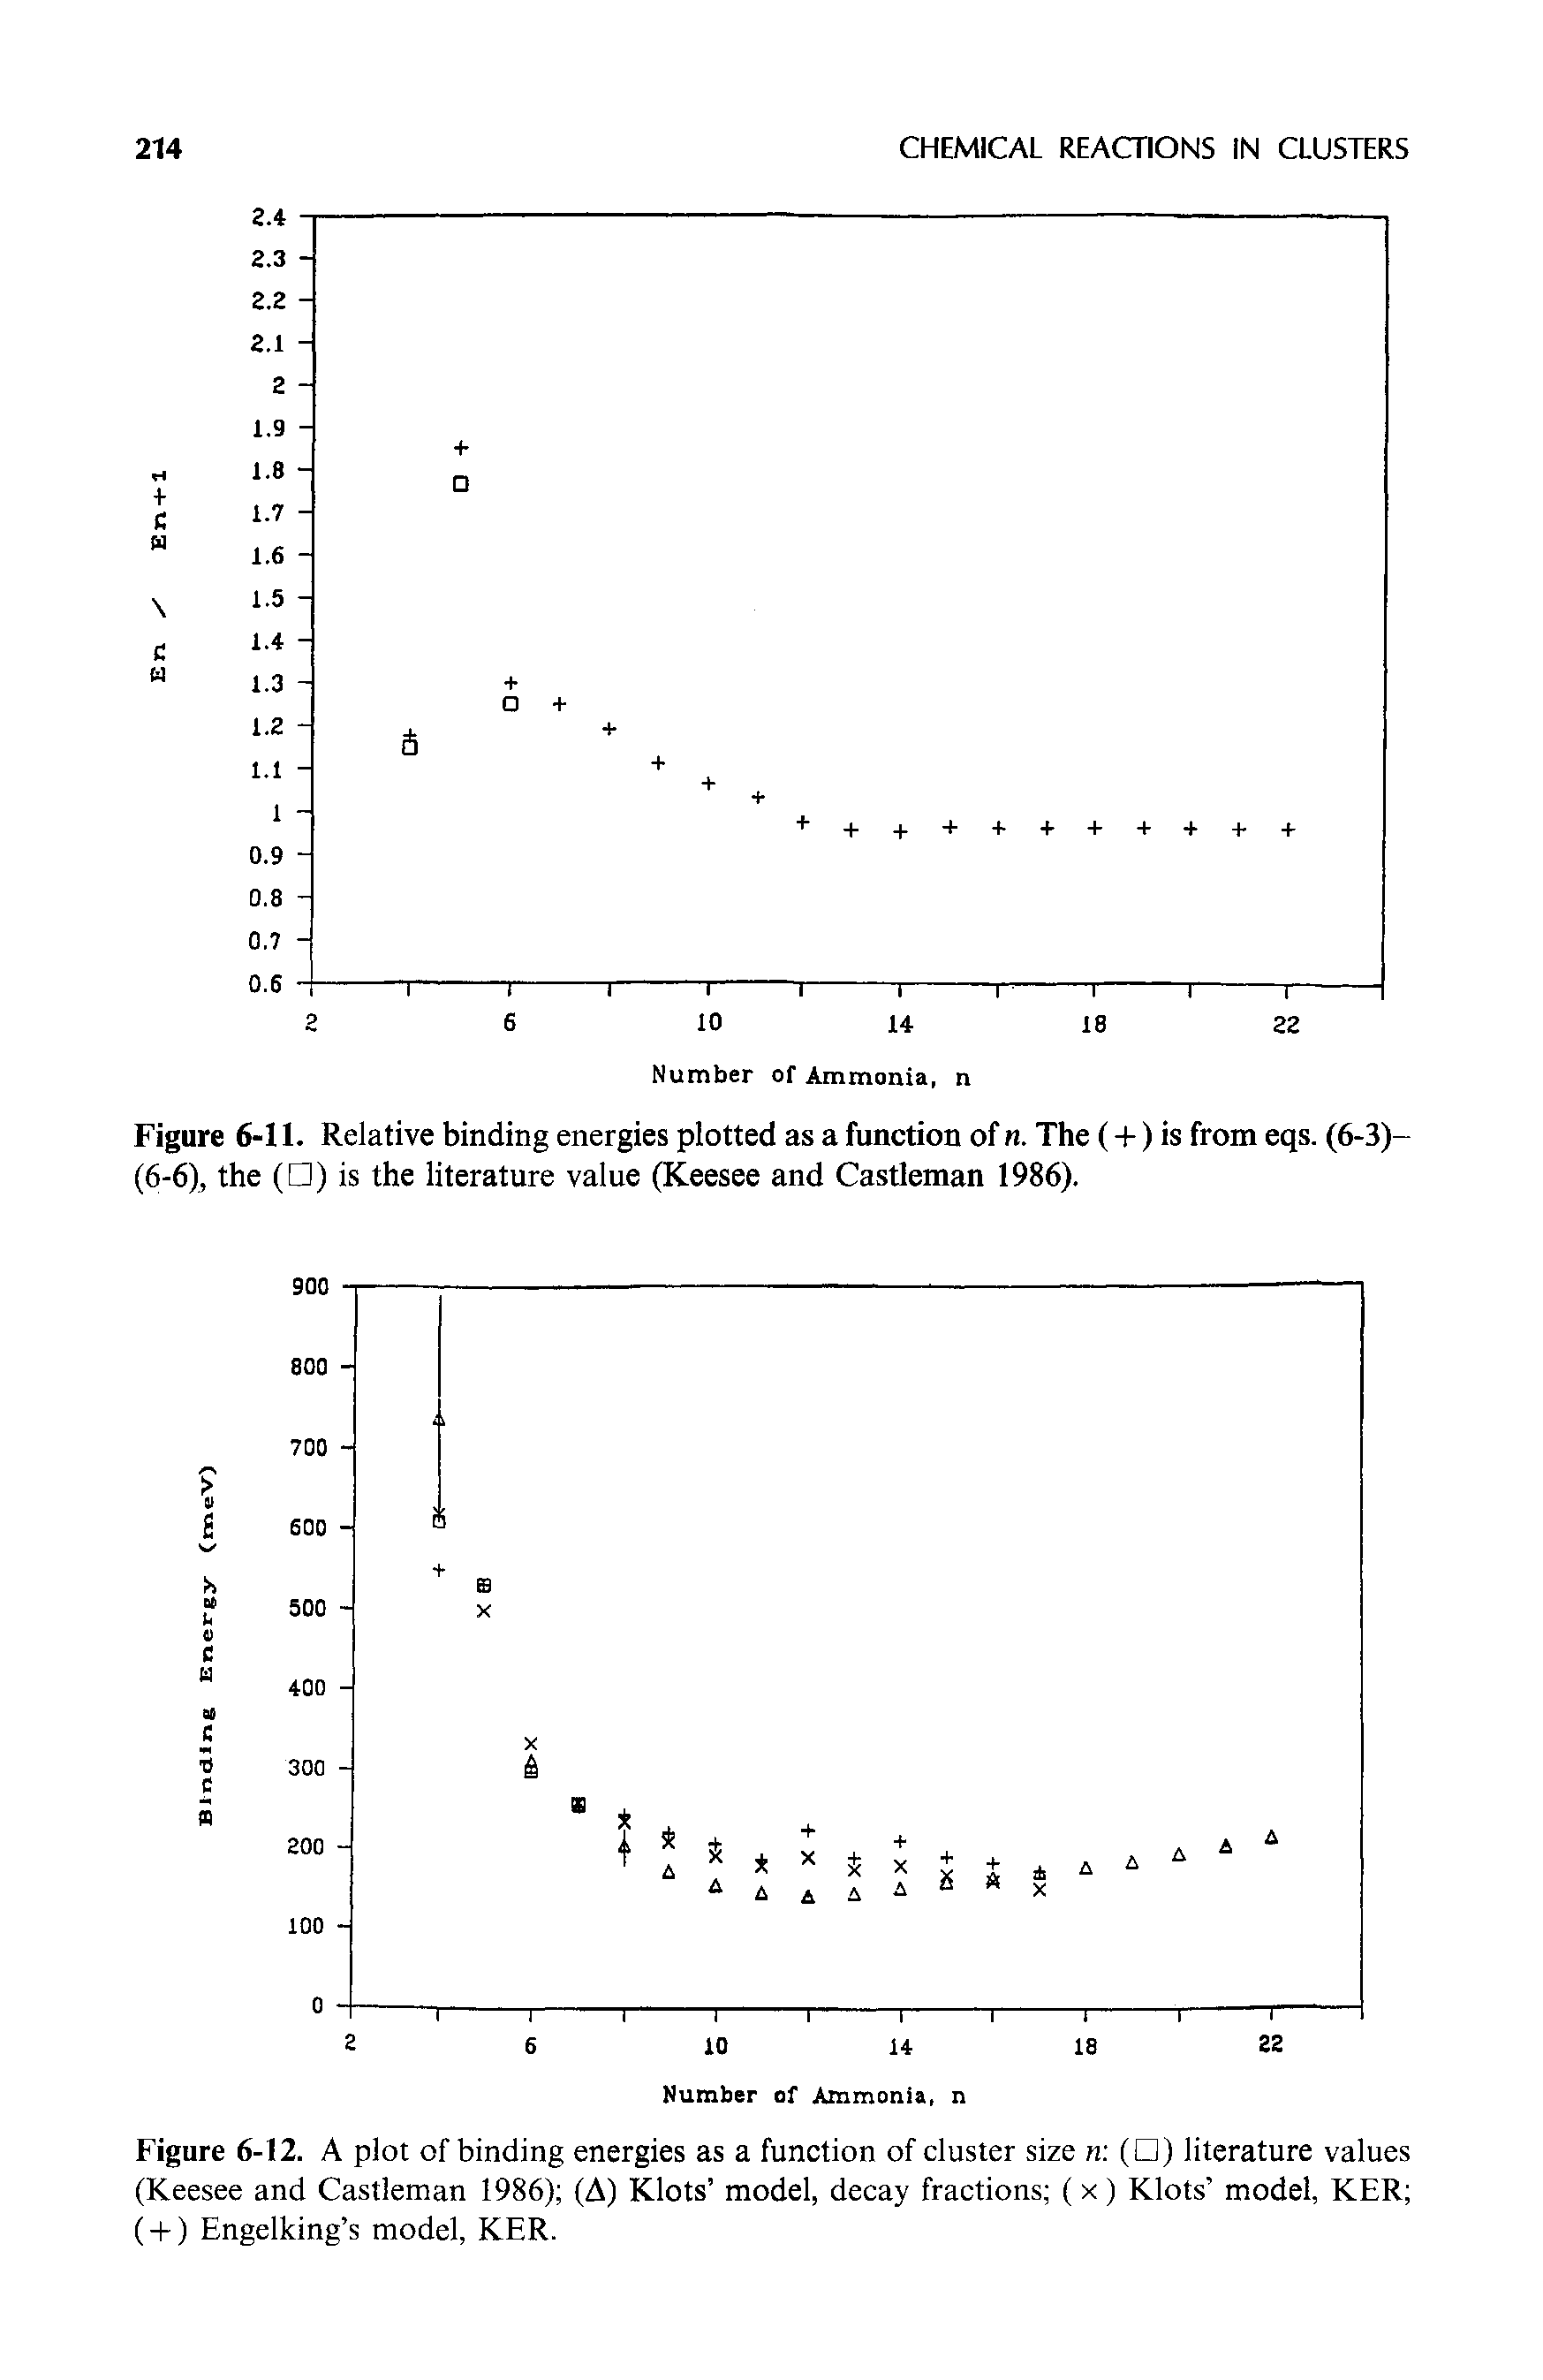 Figure 6-12. A plot of binding energies as a function of cluster size n ( ) literature values (Keesee and Castleman 1986) (A) Klots model, decay fractions (x) Klots model, KER ( + ) Engelking s model, KER.